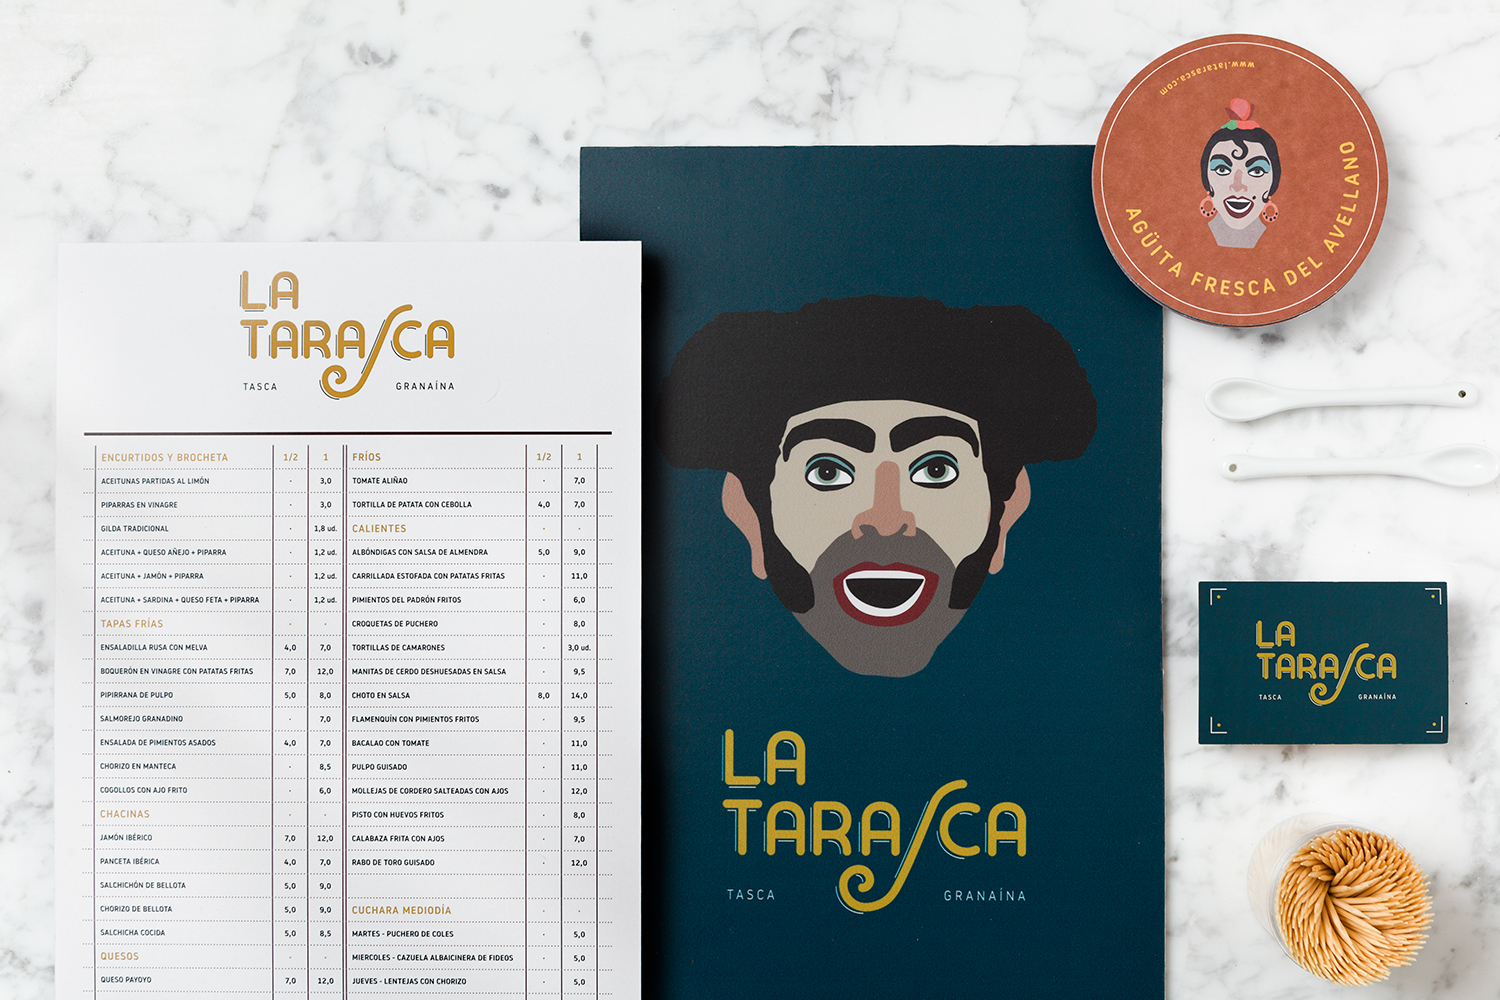 La Tarasca, tasca granadina  by Colectivo Verbena - Creative Work